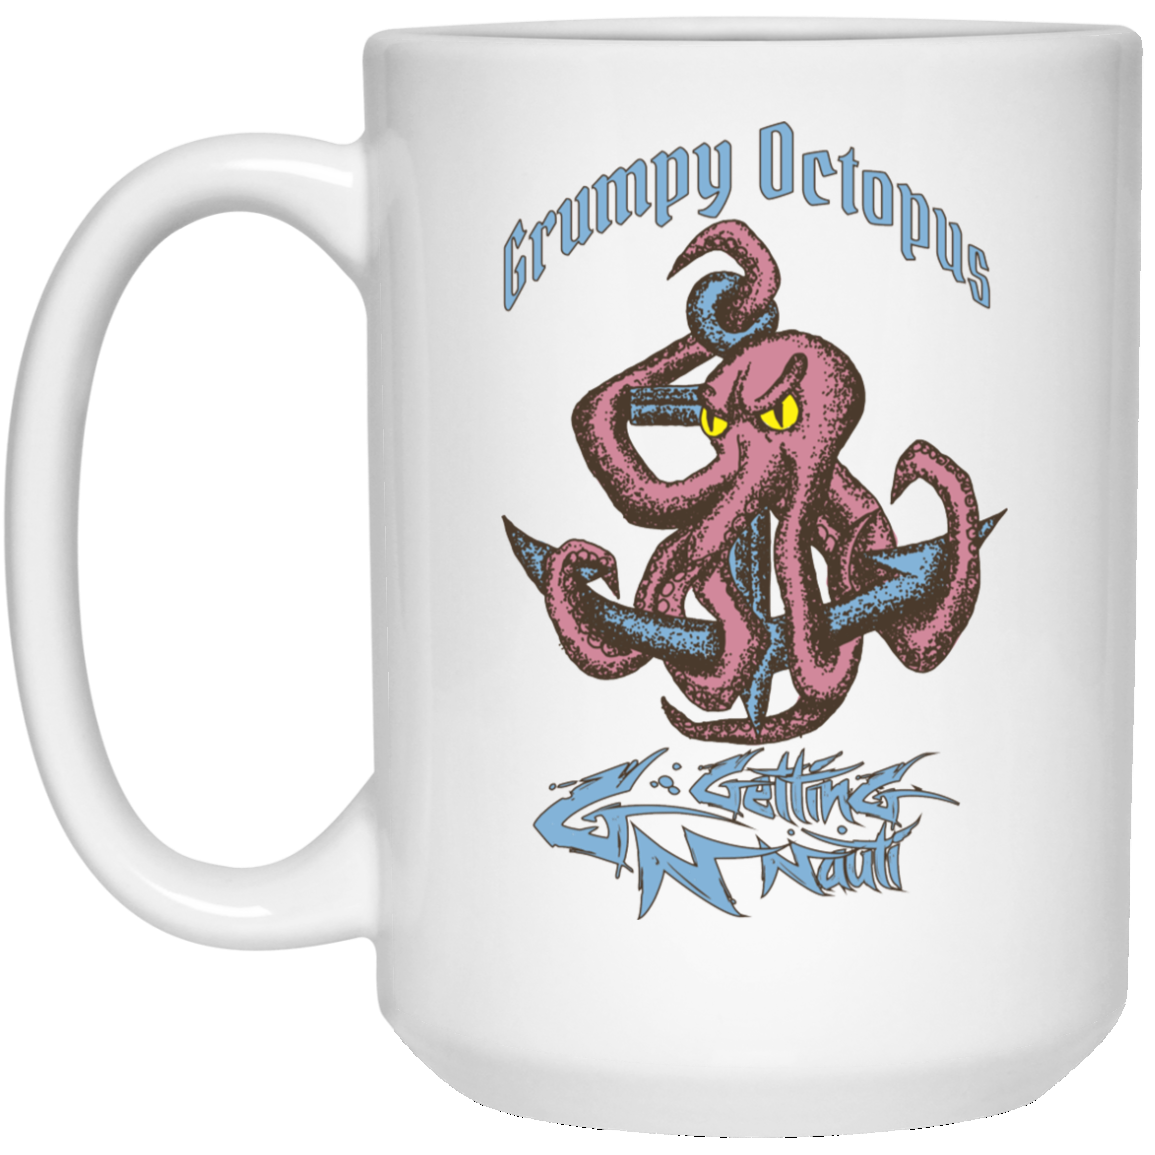 Grumpy Octopus - Mugs